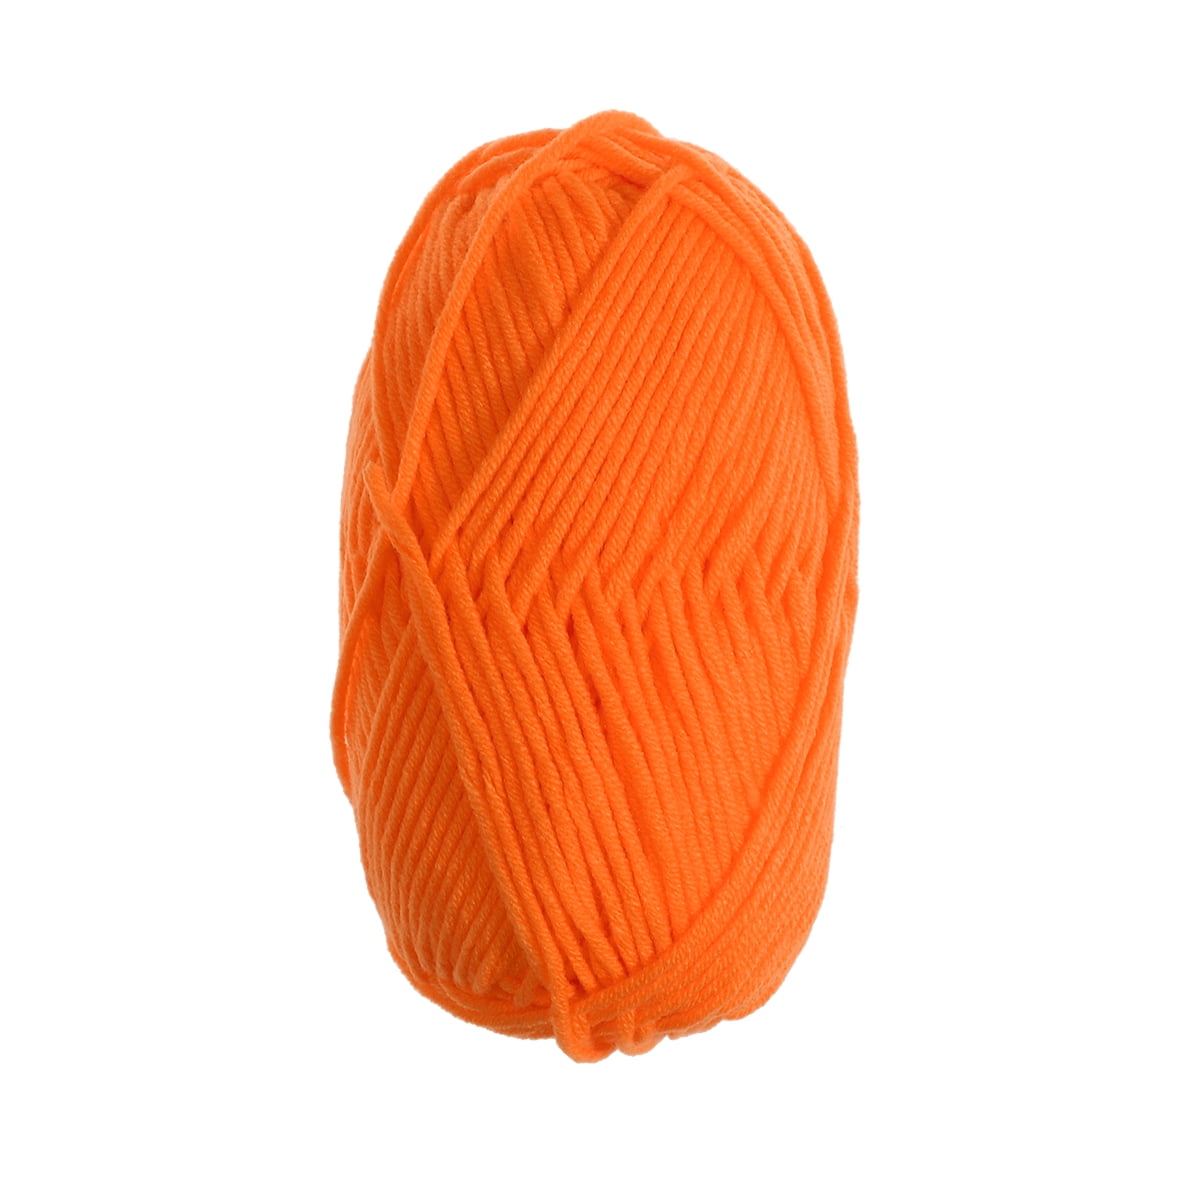 50g Milk Cotton Combed Yarn Soft Crochet Yarn Baby Yarn Crochet For  Knitting Wool Scarf Hand Knitting Sale Sweater A9MX0002 Y211129 From  Mengqiqi05, $3.54